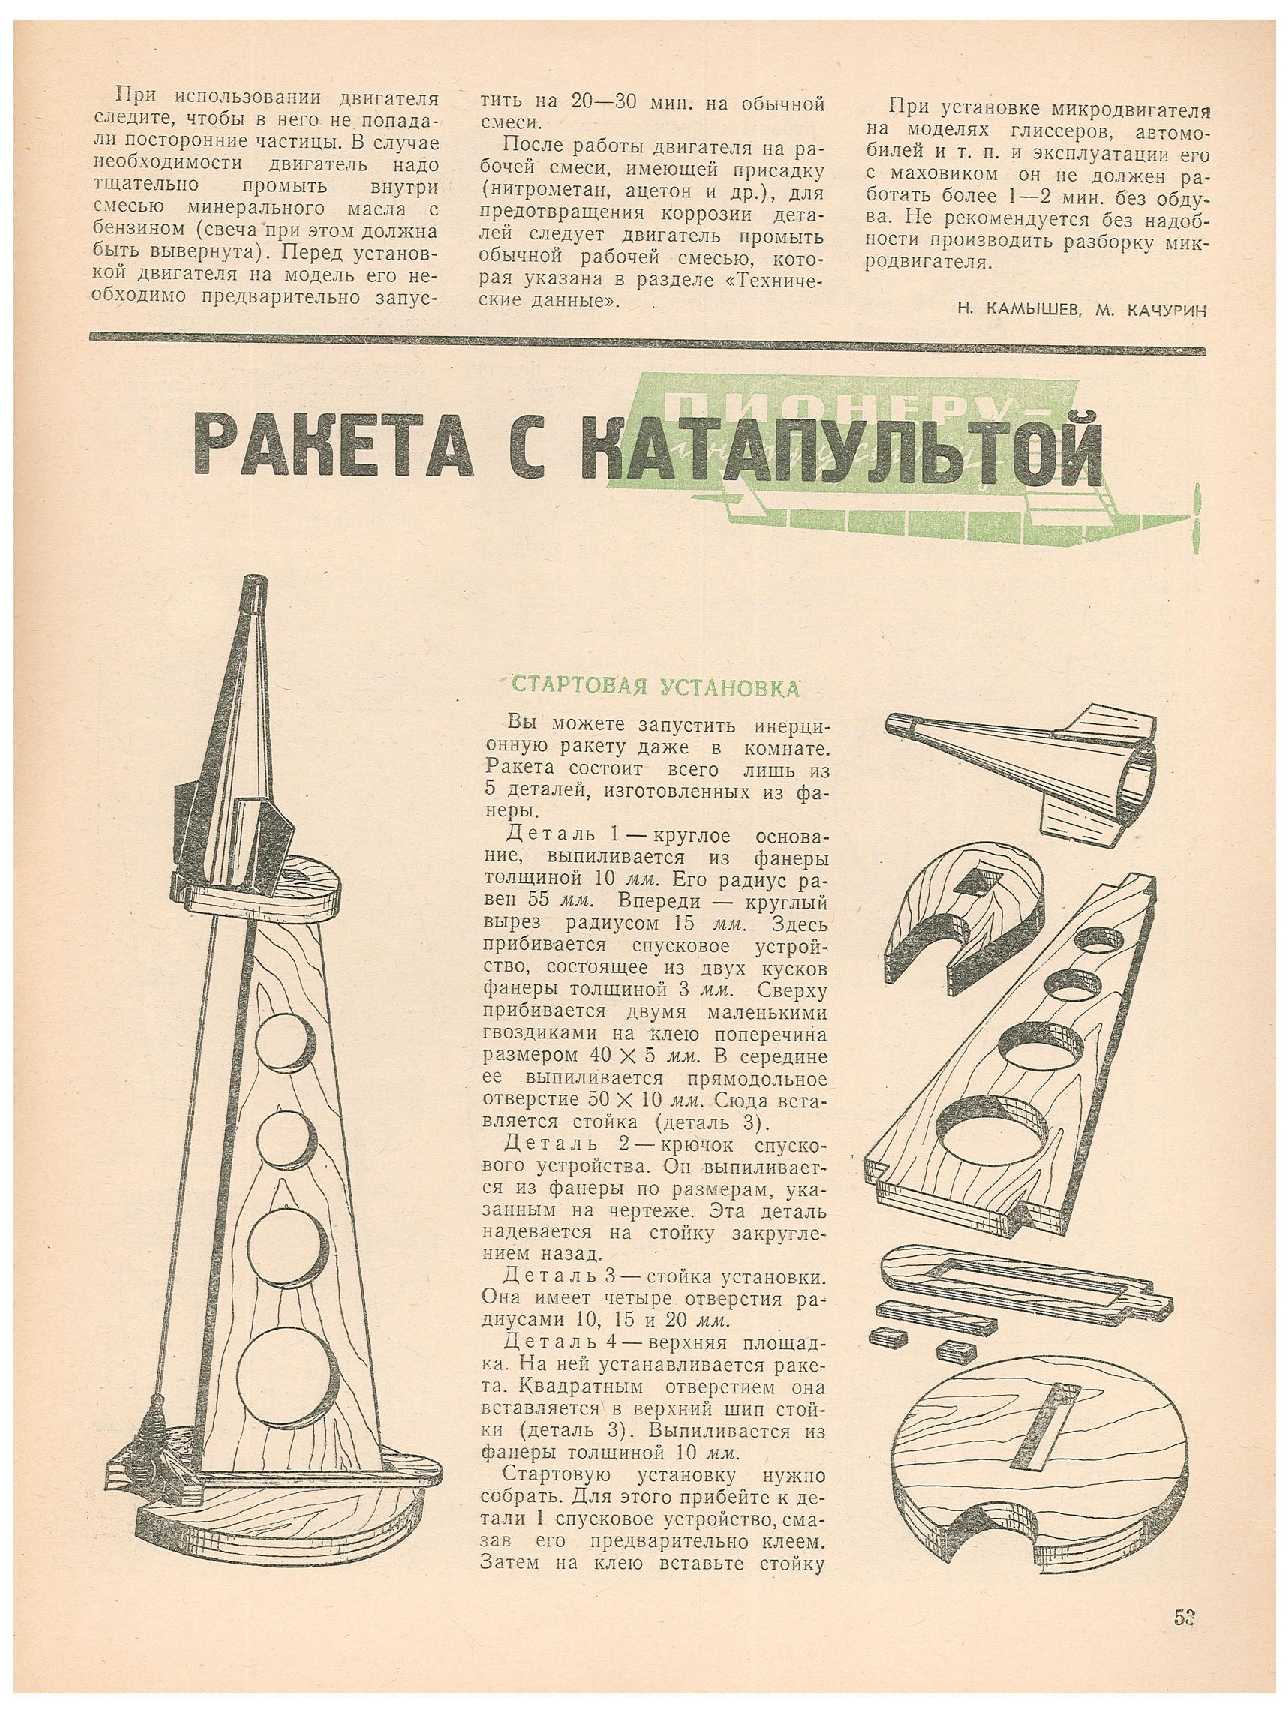 ЮМК 9, 1964, 53 c.